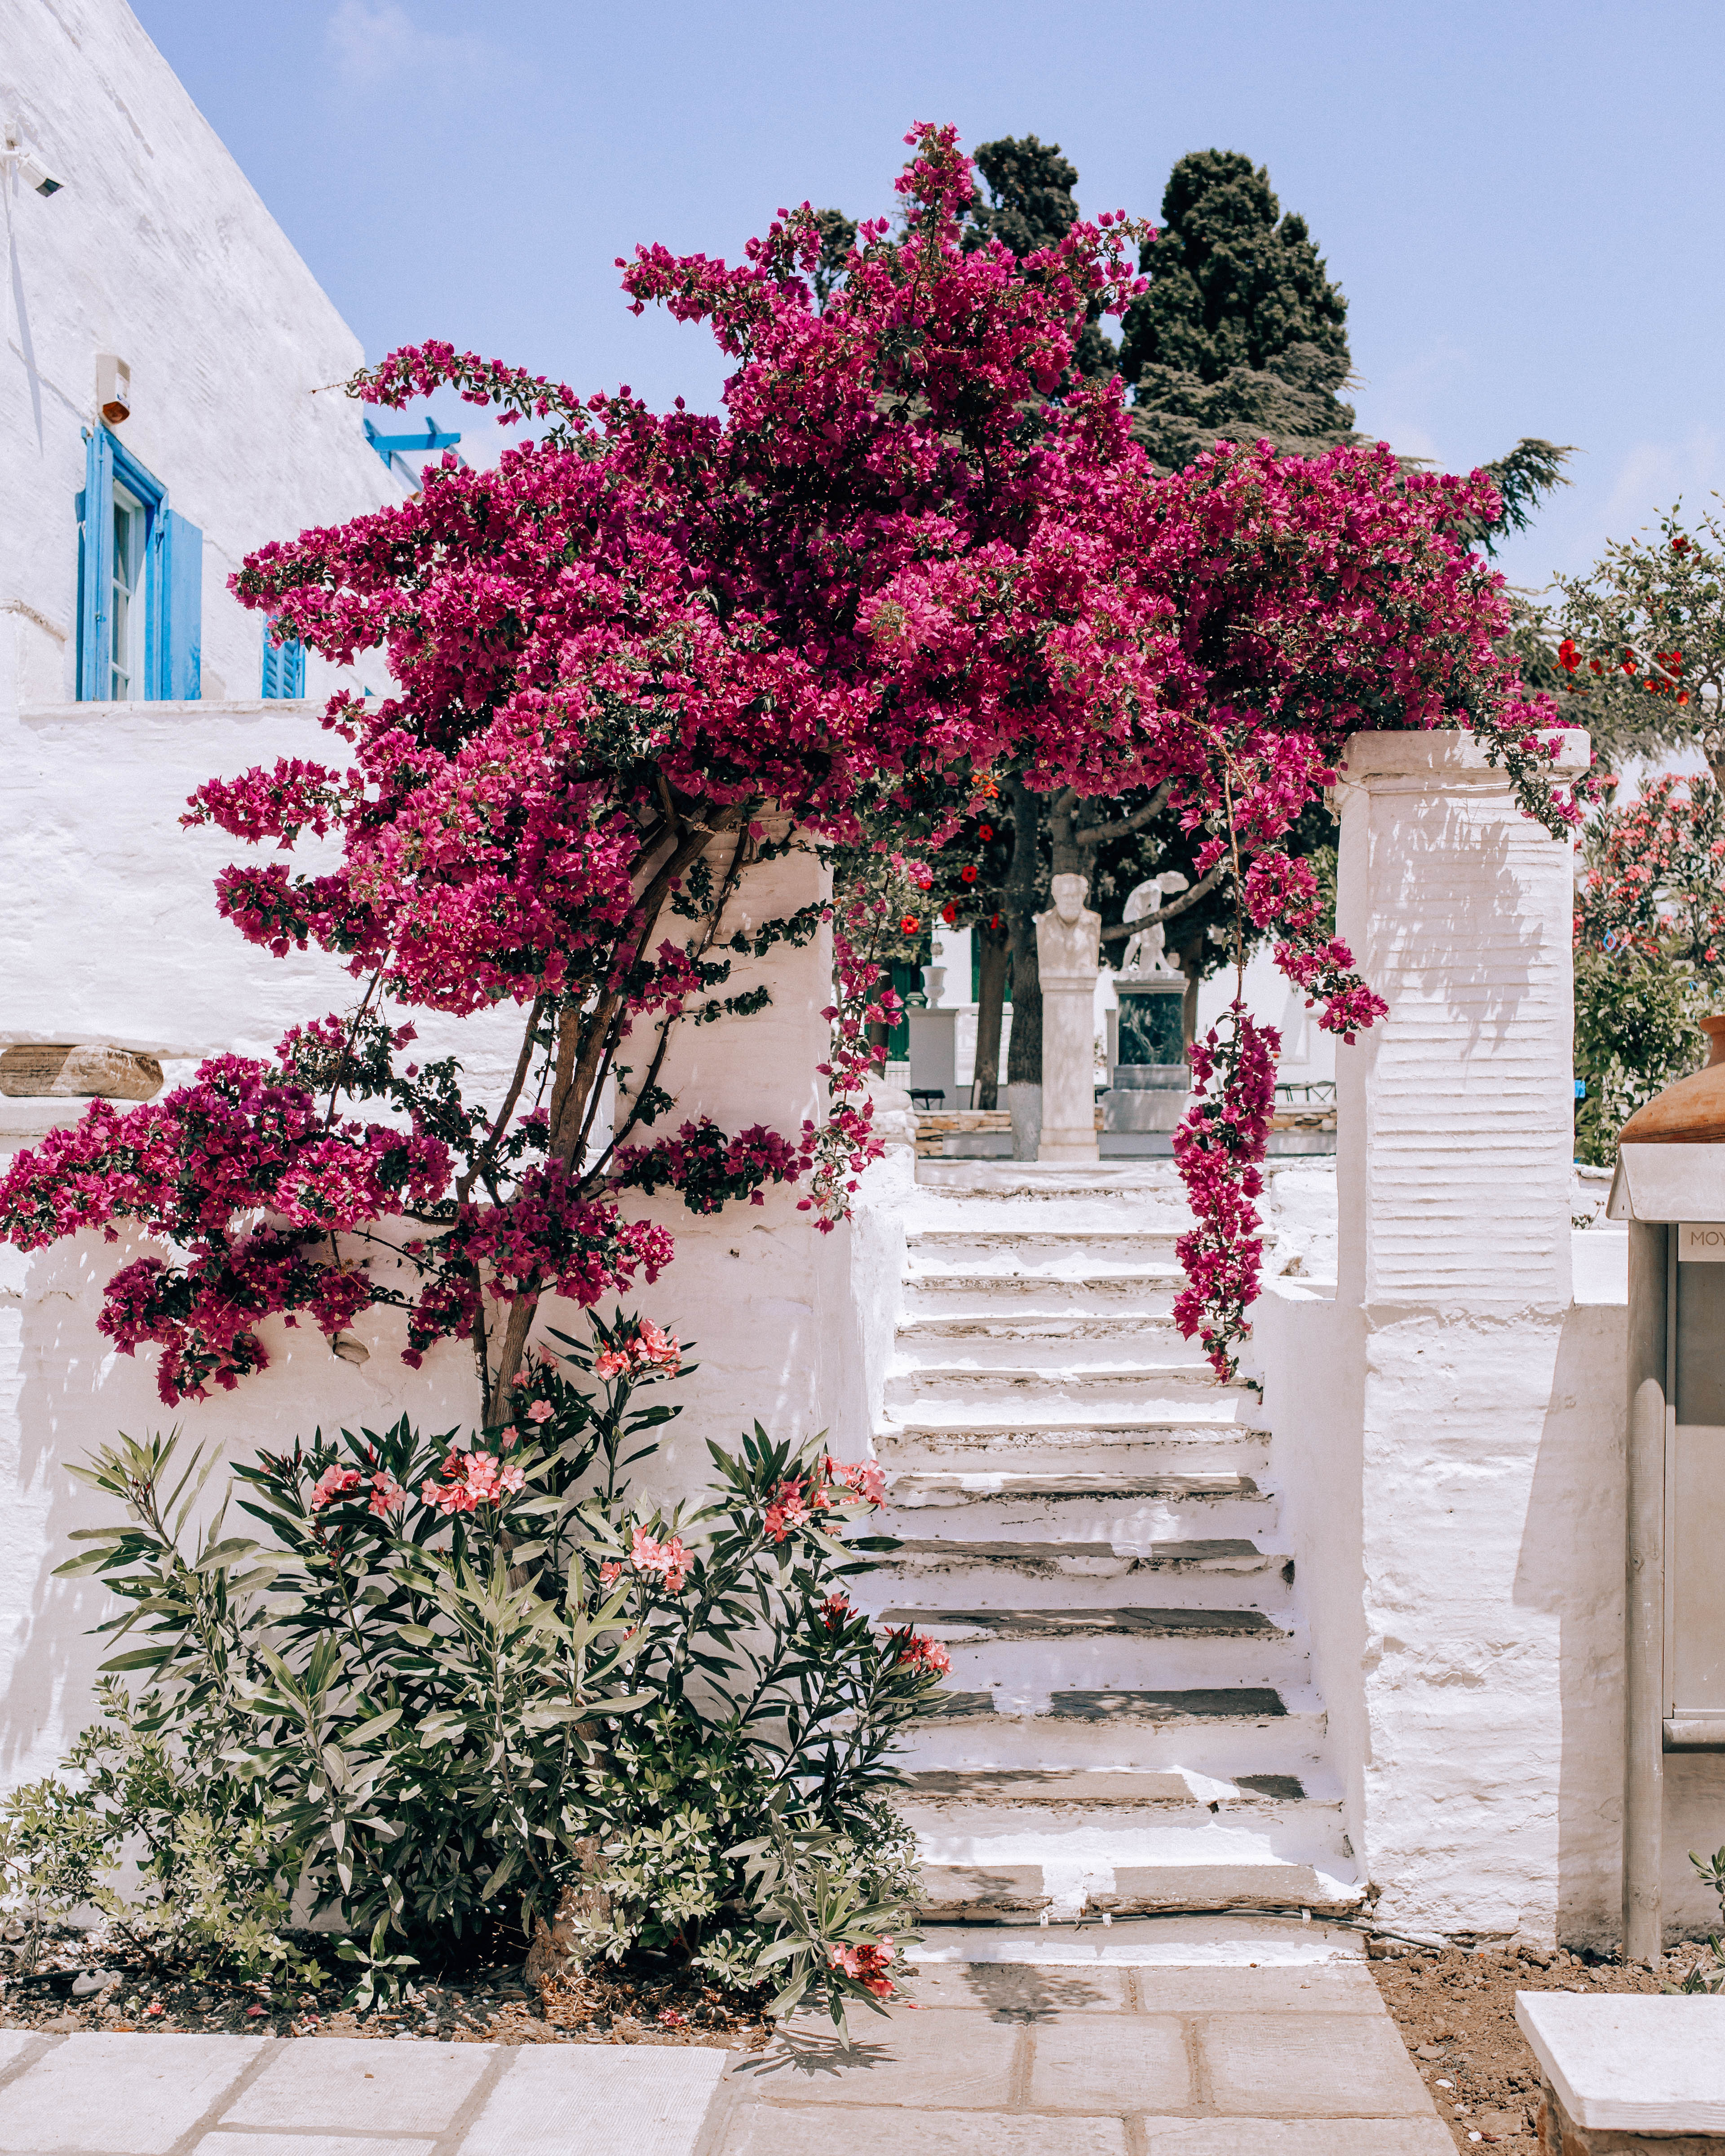 Tinos-Blog-44-of-50 3 Days on the Greek Island Tinos